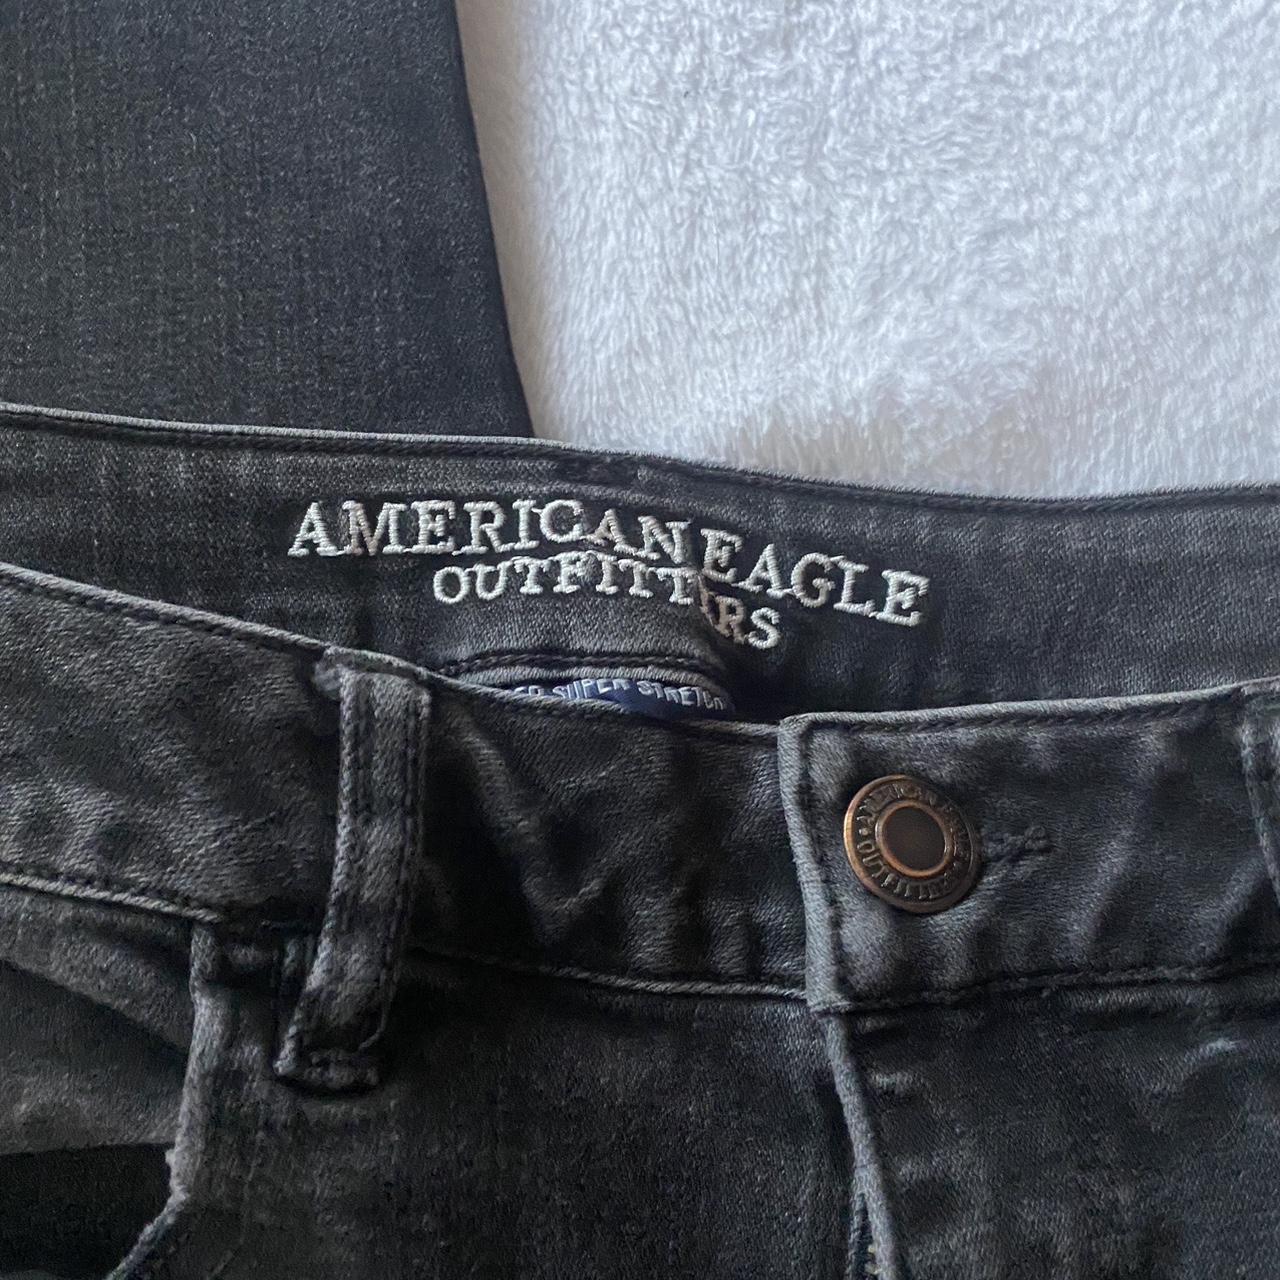 American eagle jeans skinny $15 - Depop